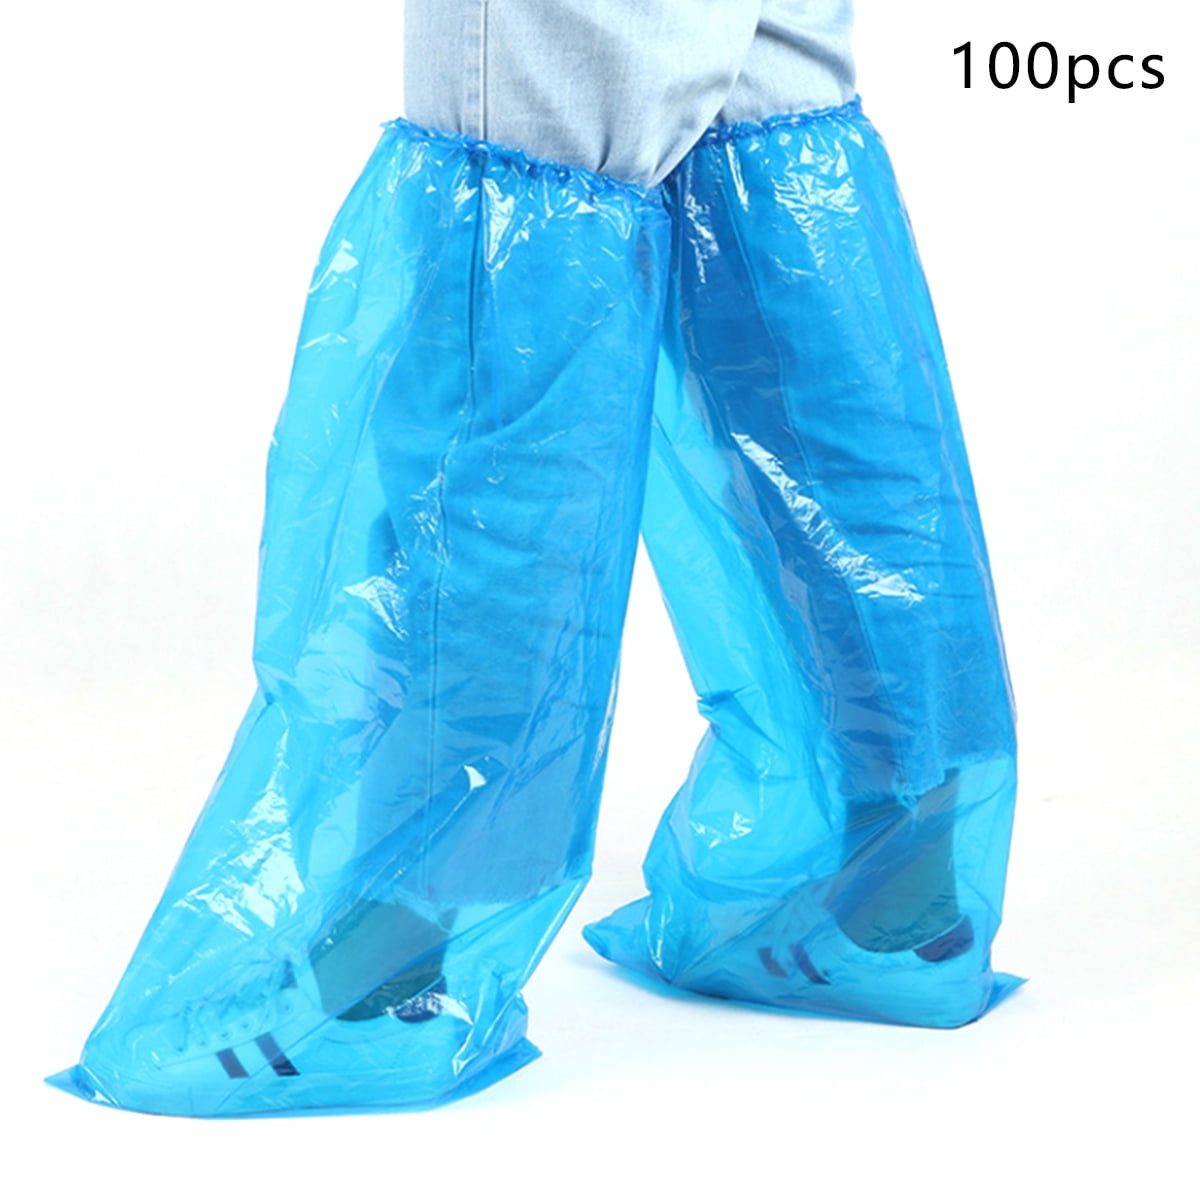 100Pcs Disposable Shoe Covers Rain Shoes Anti Slip Boot Covers Waterproof Blue 